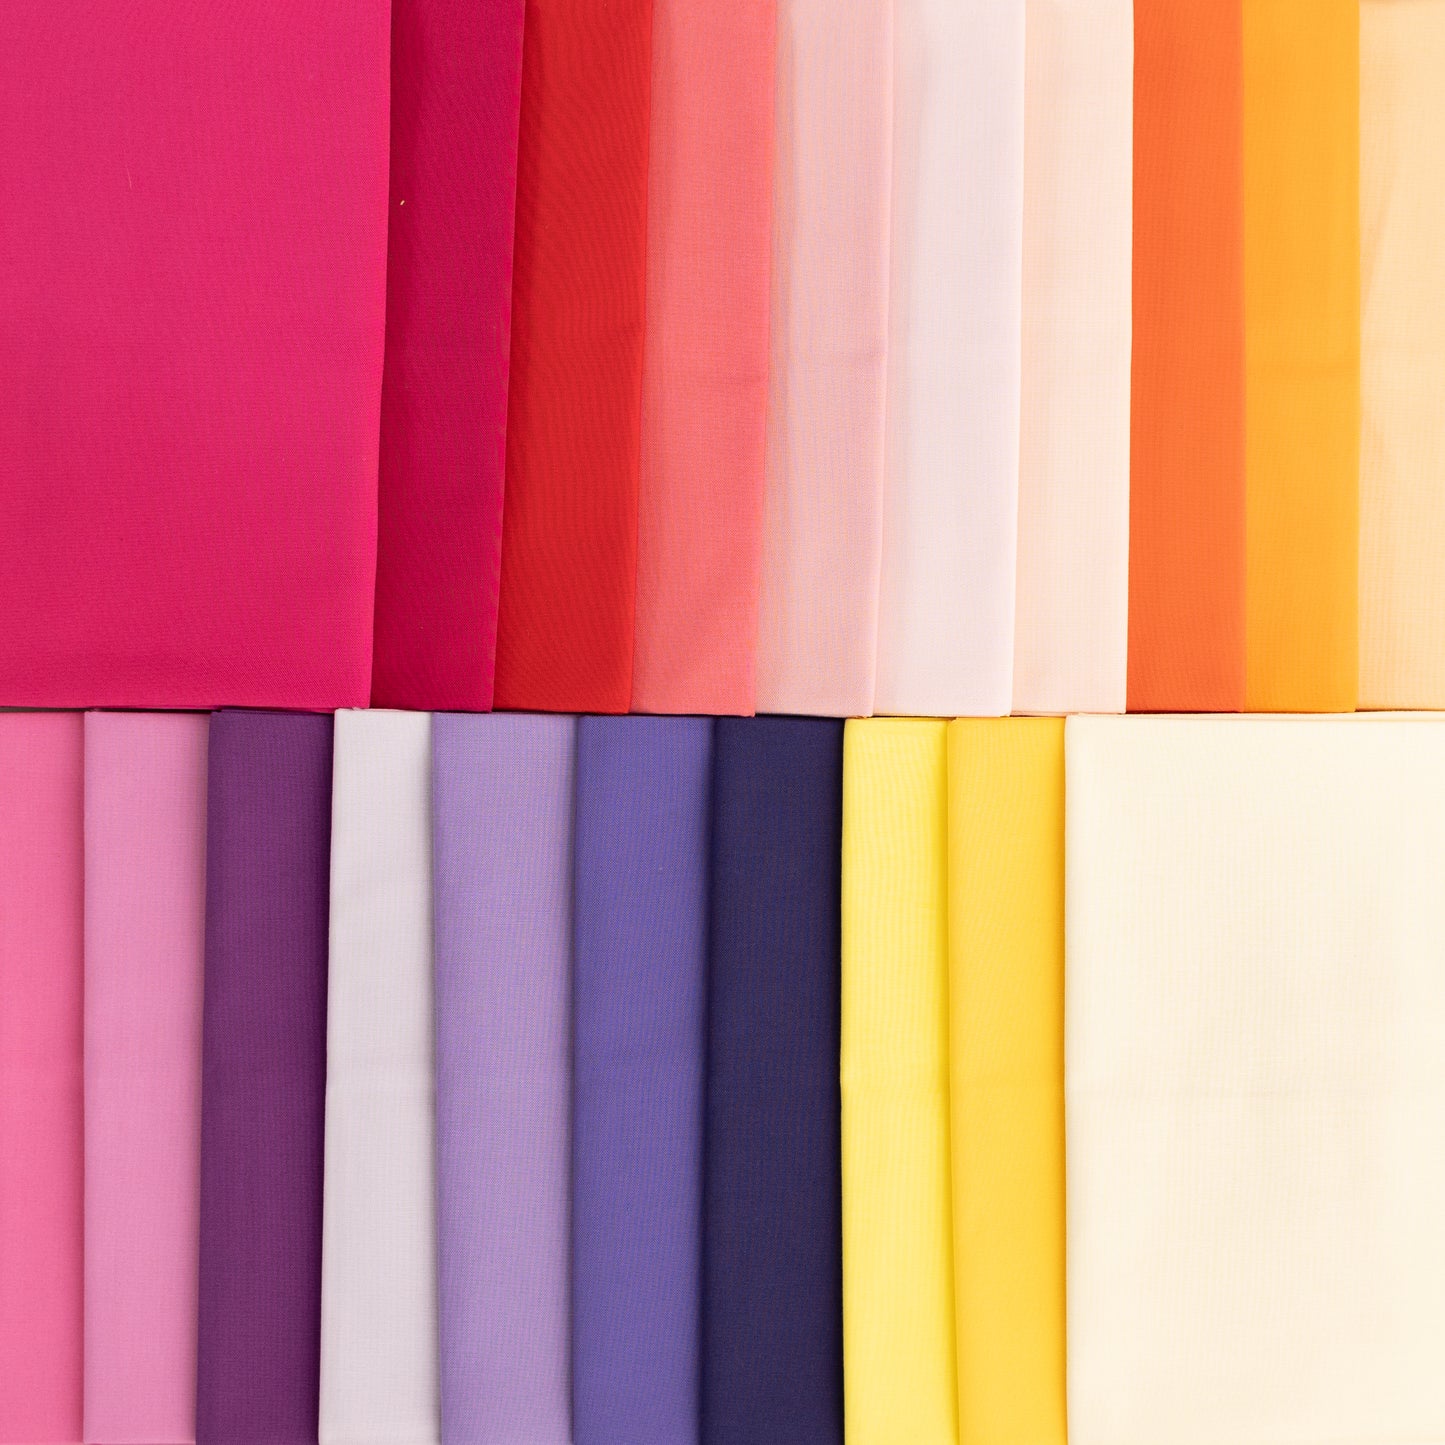 Twirl - Quilt Kit - Daybreak Fabrics (Throw size, 56" x 64")